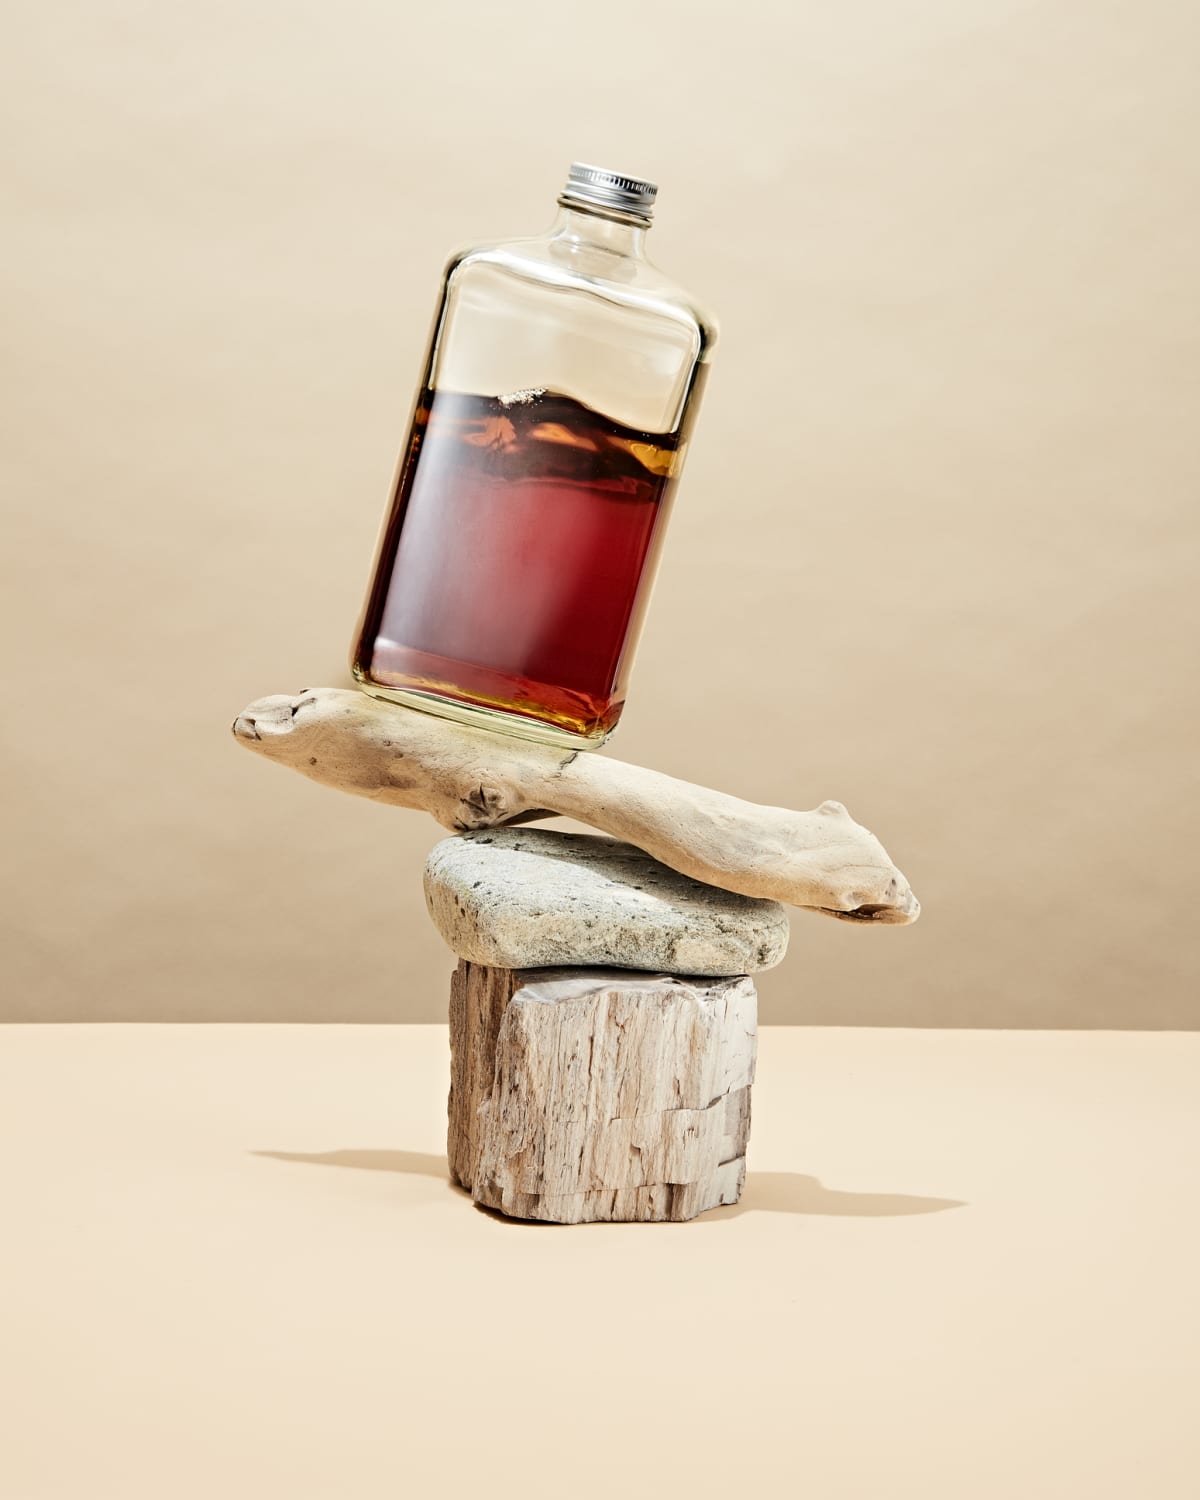 A bottle of bourbon rests on natural elements